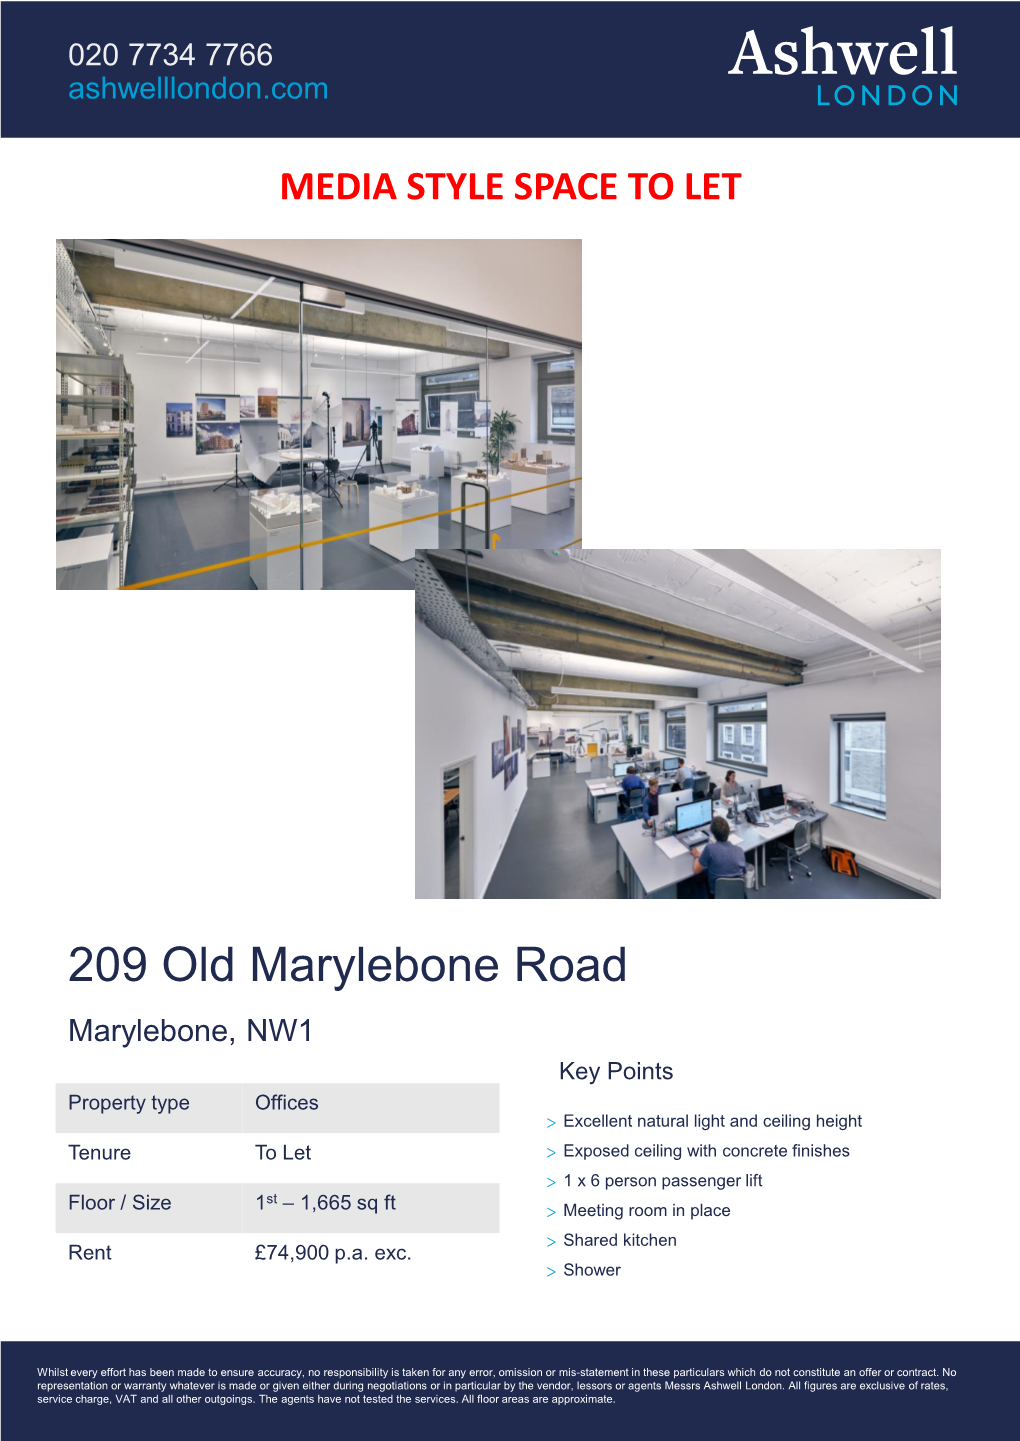 209 Old Marylebone Road